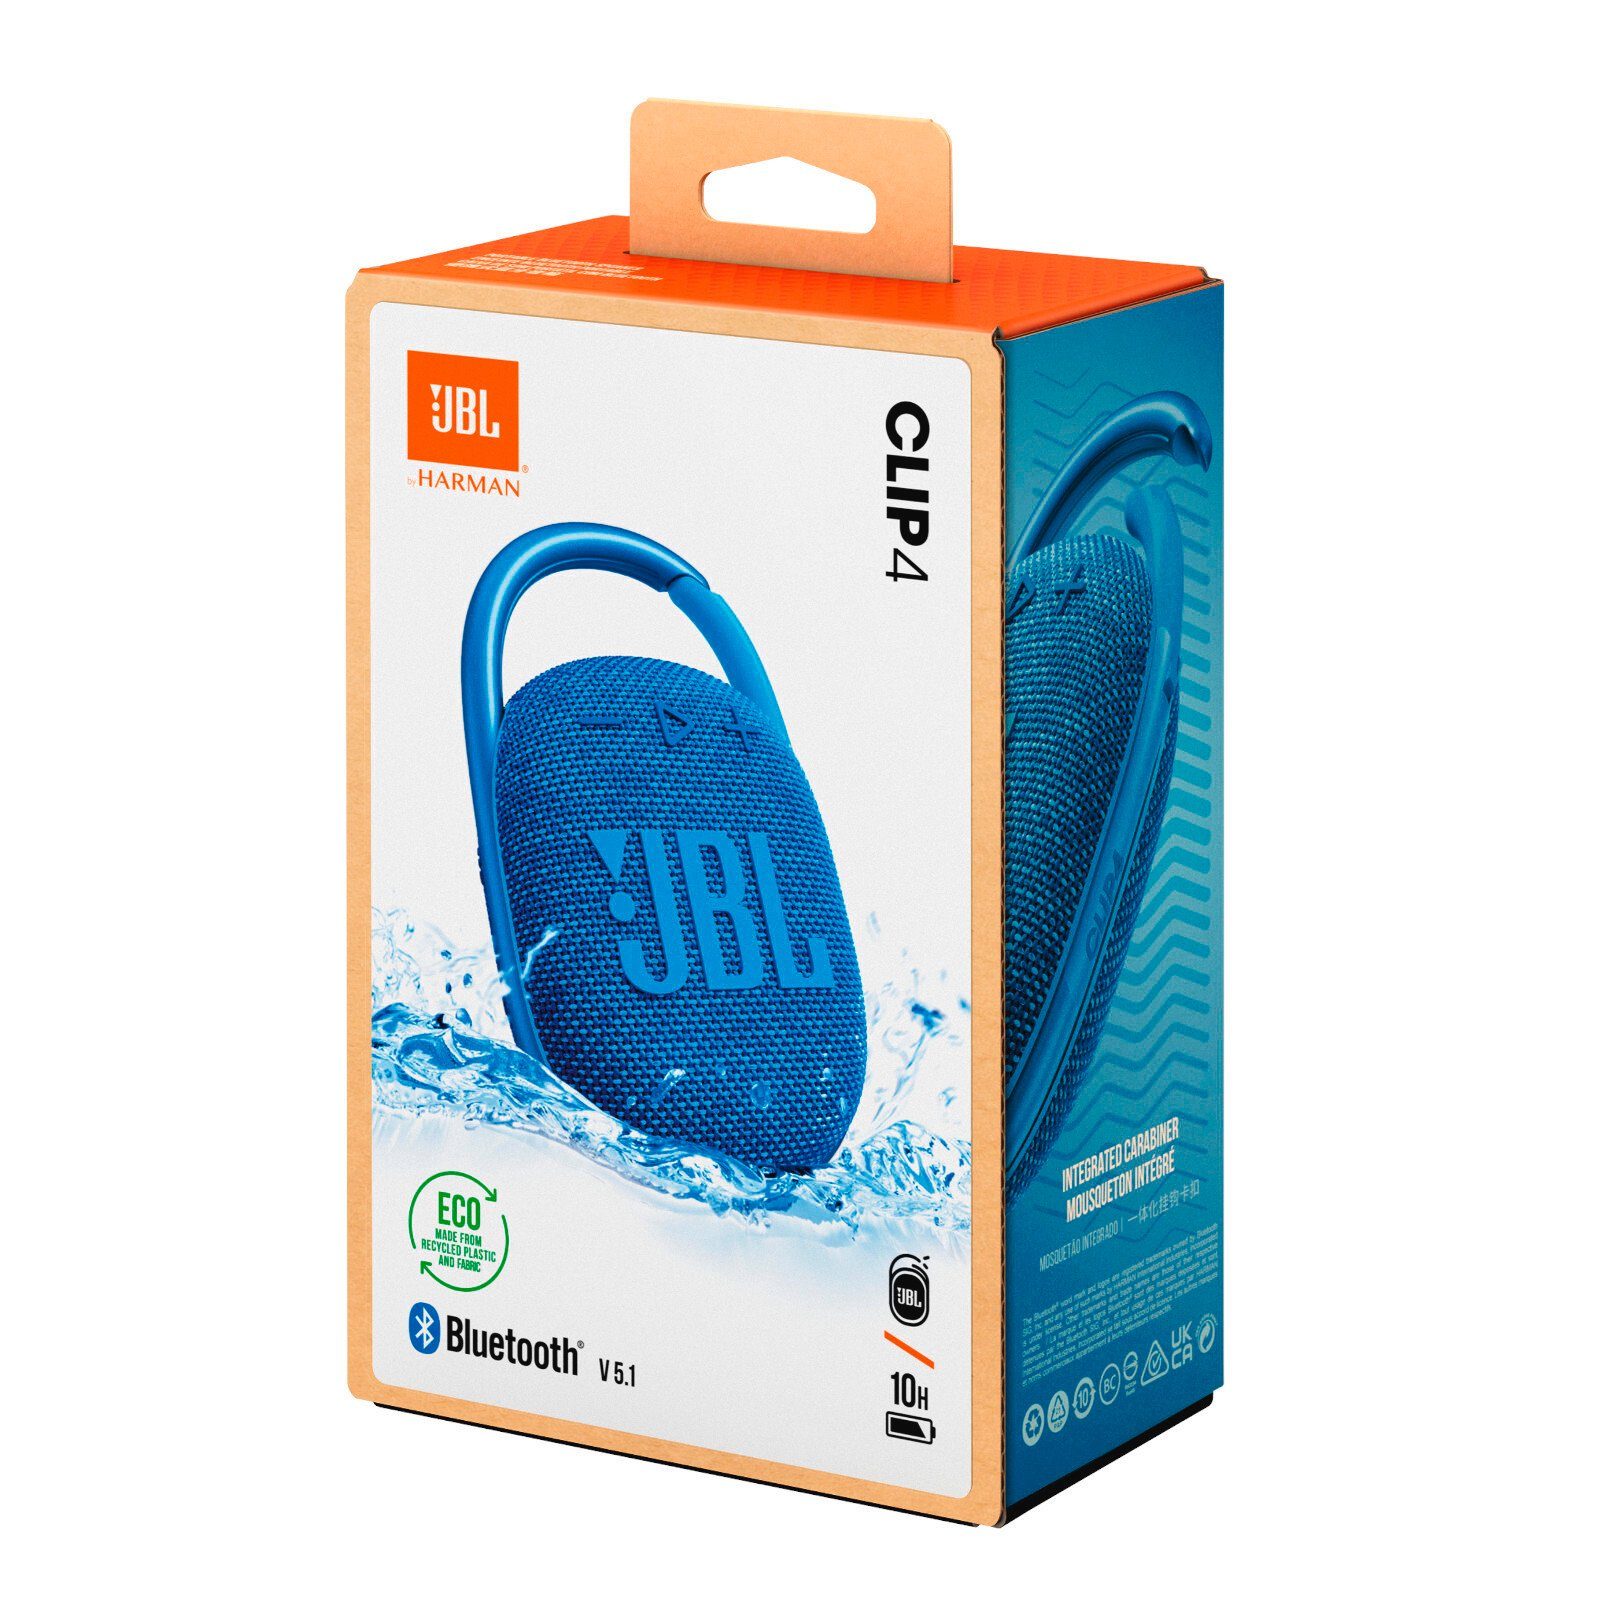 W) 4 JBL Bluetooth-Lautsprecher ECO 5 Clip (Bluetooth, Blau